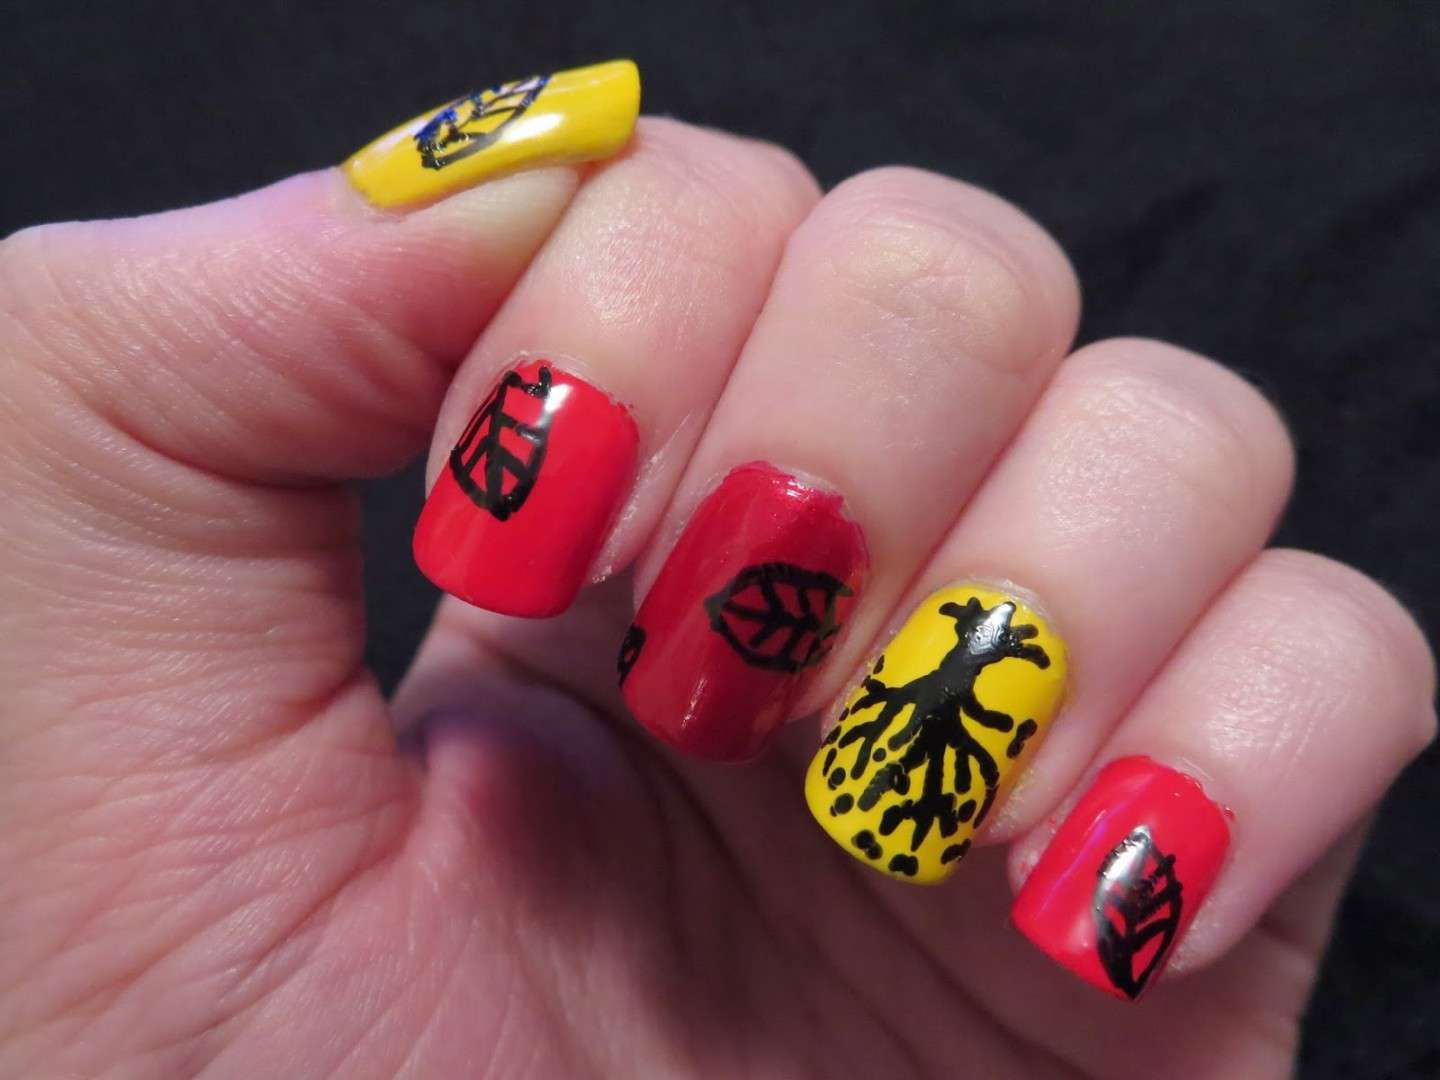 Divergent nail art rossa e gialla